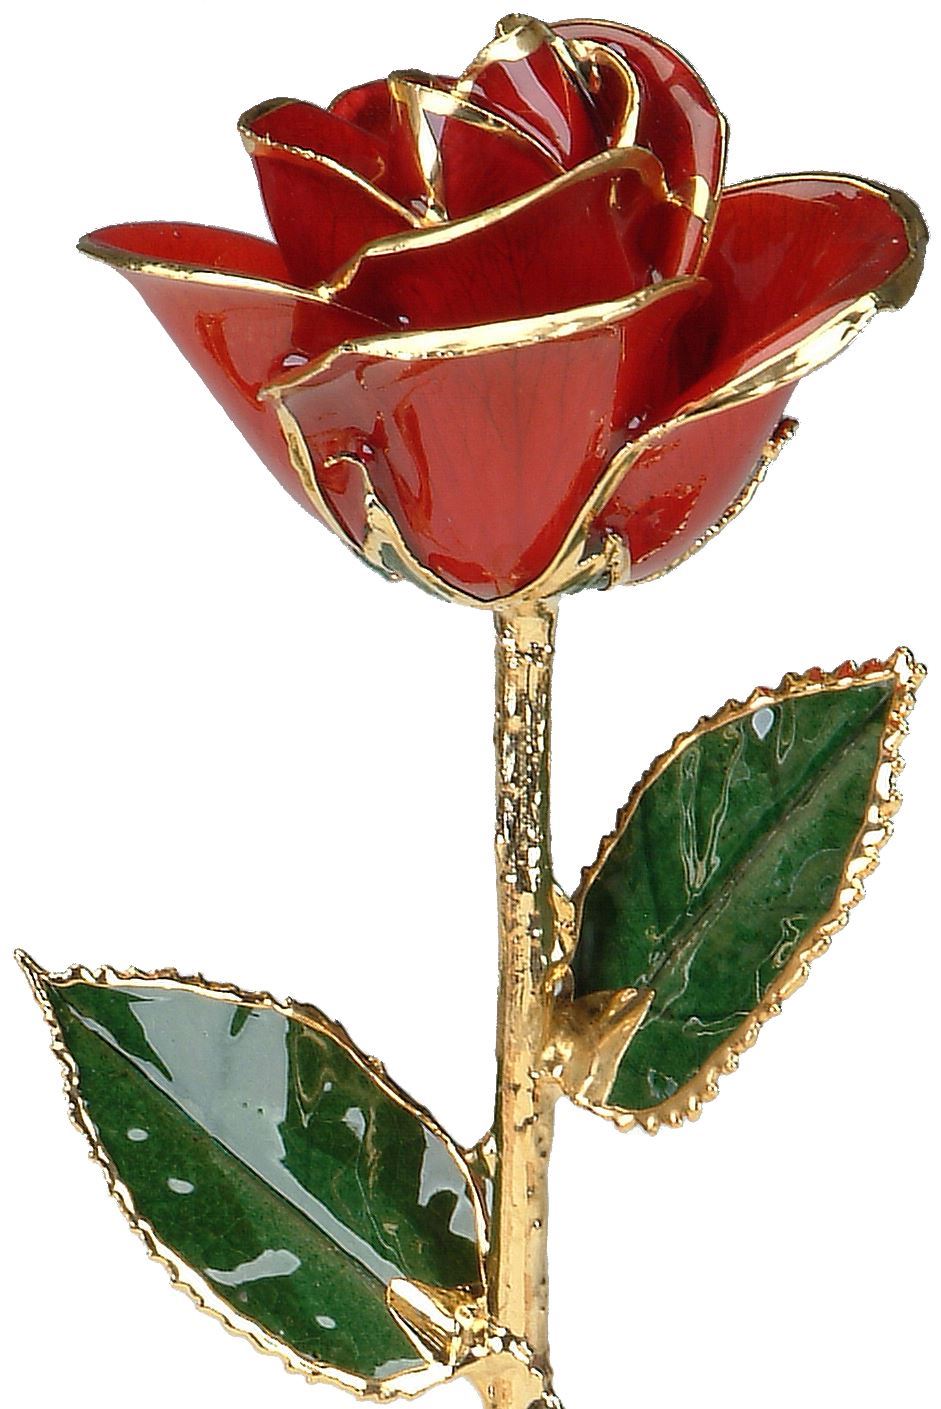 https://www.arthursjewelers.com/content/images/thumbs/Original/red-rose_1-19361795.jpeg